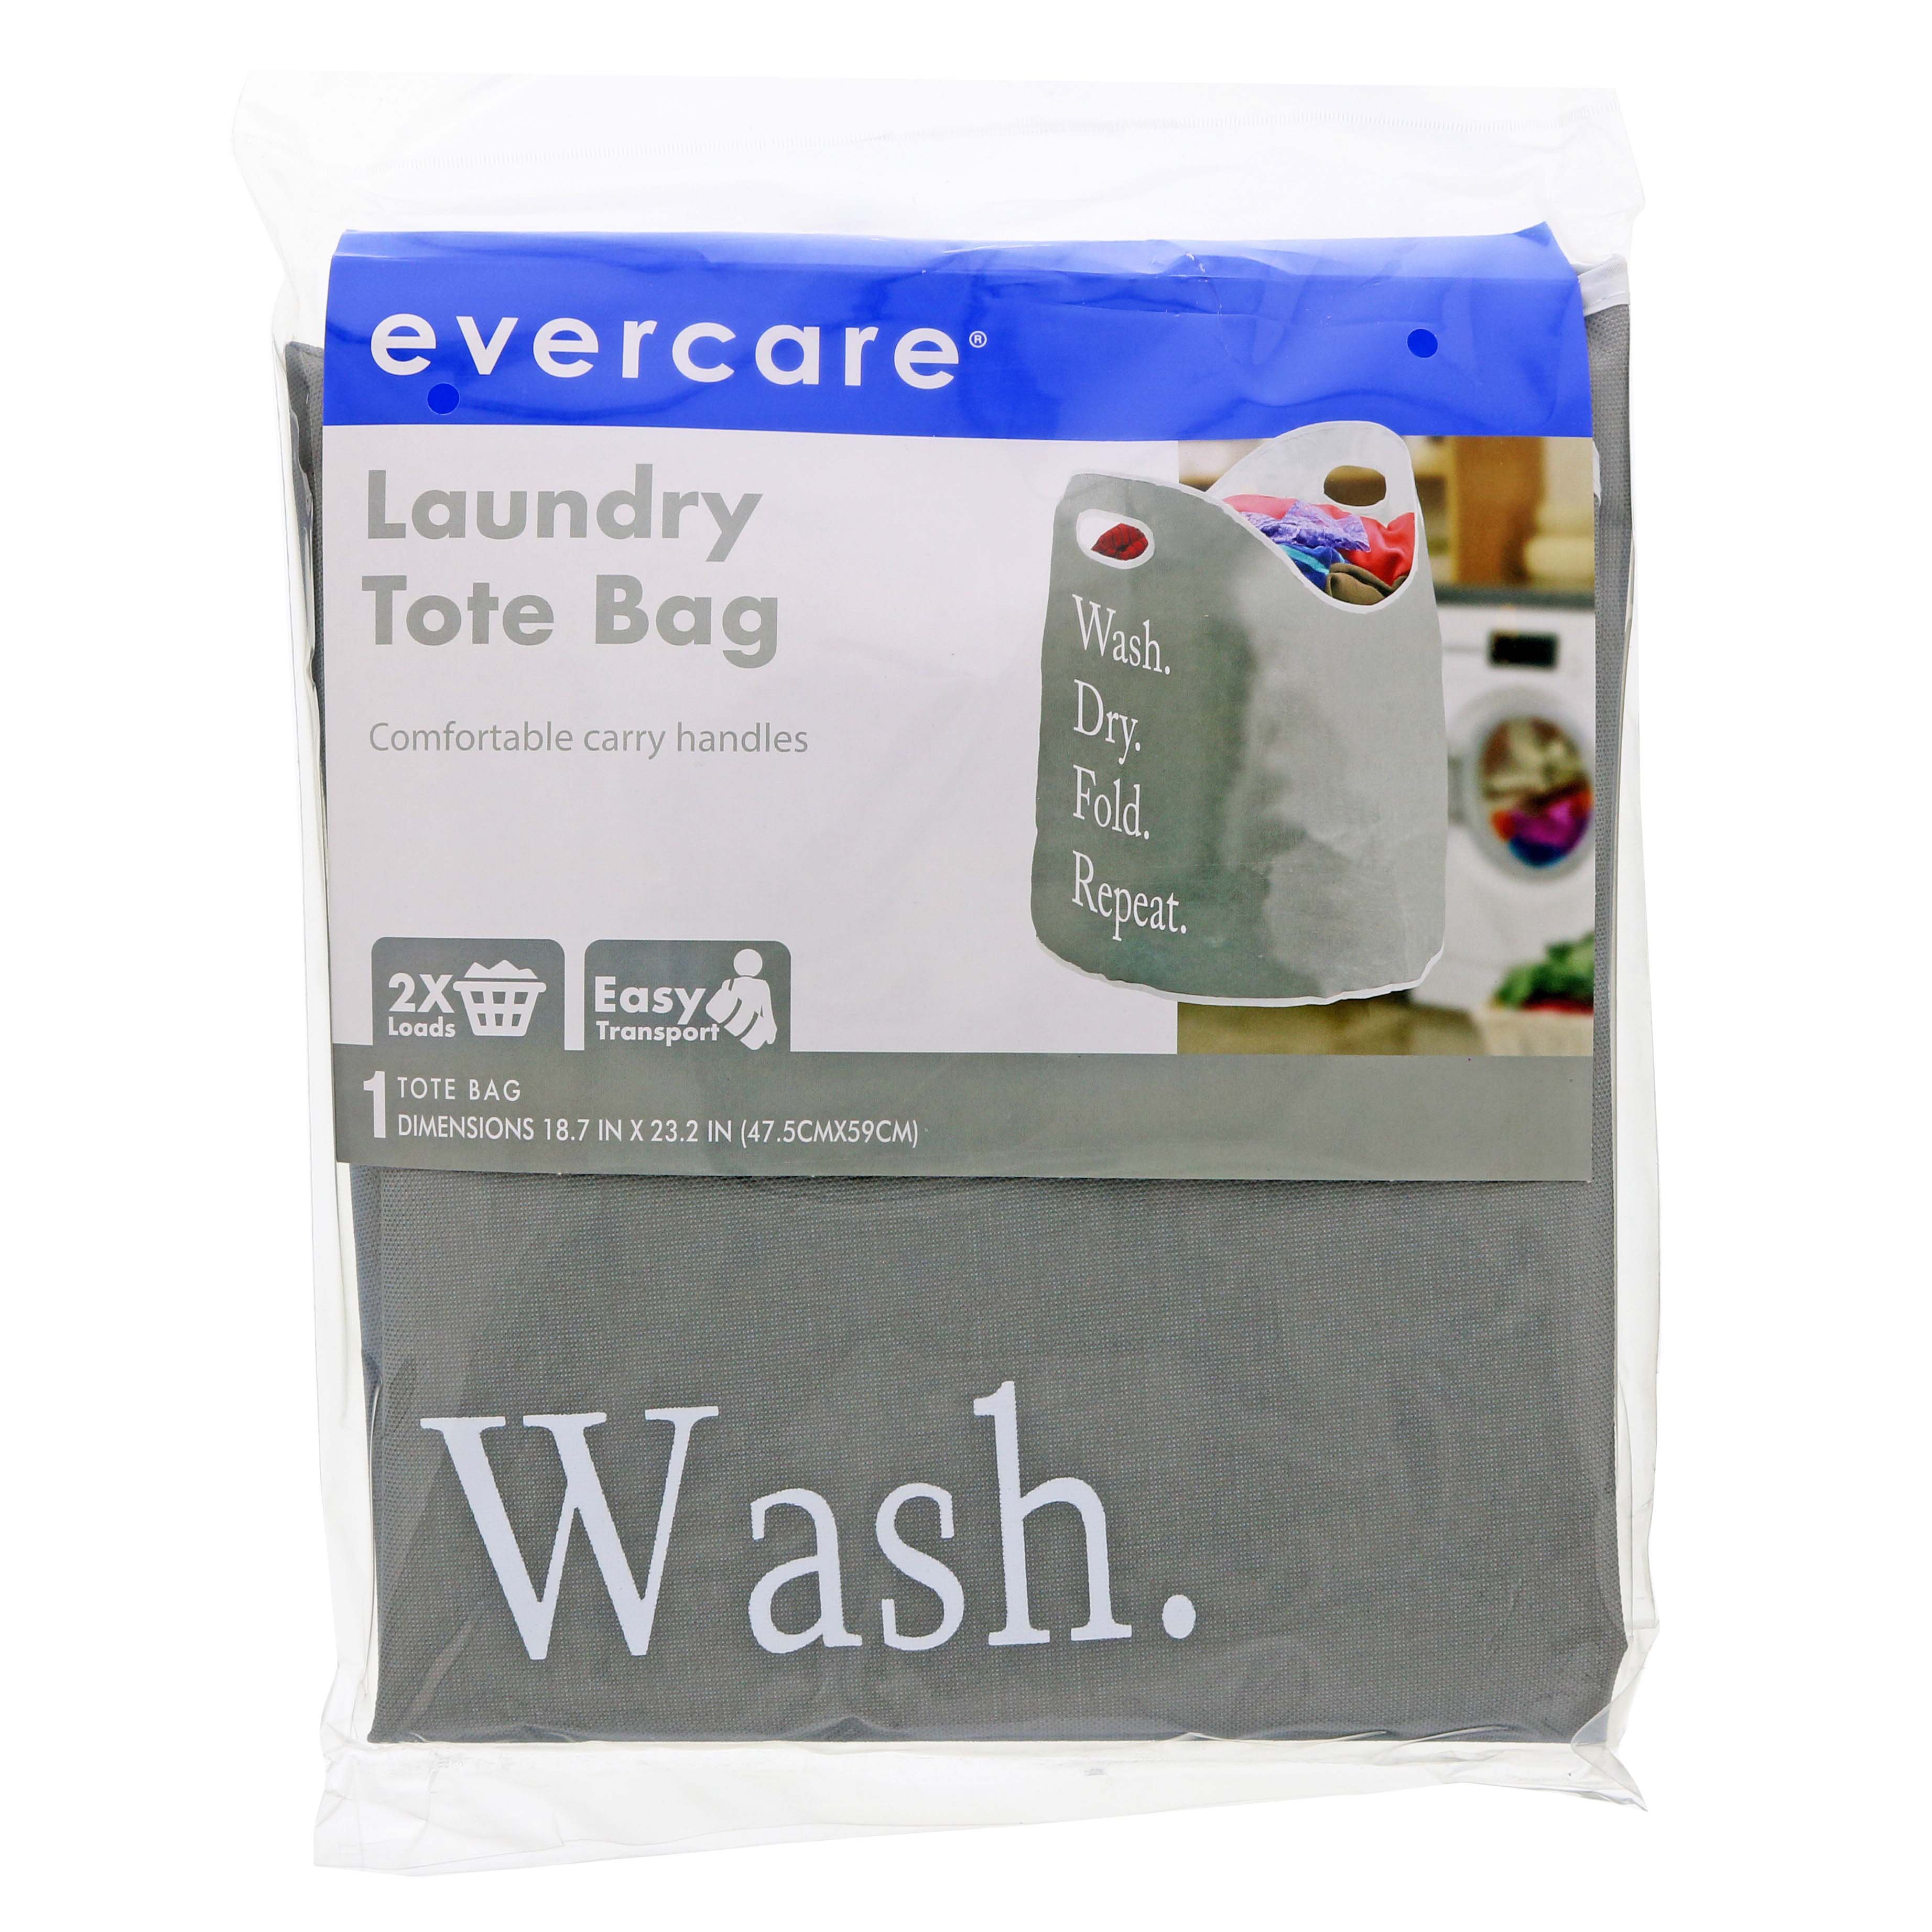 Evercare Laundry Tote Bag - Shop Closet & Cabinet Organizers at H-E-B